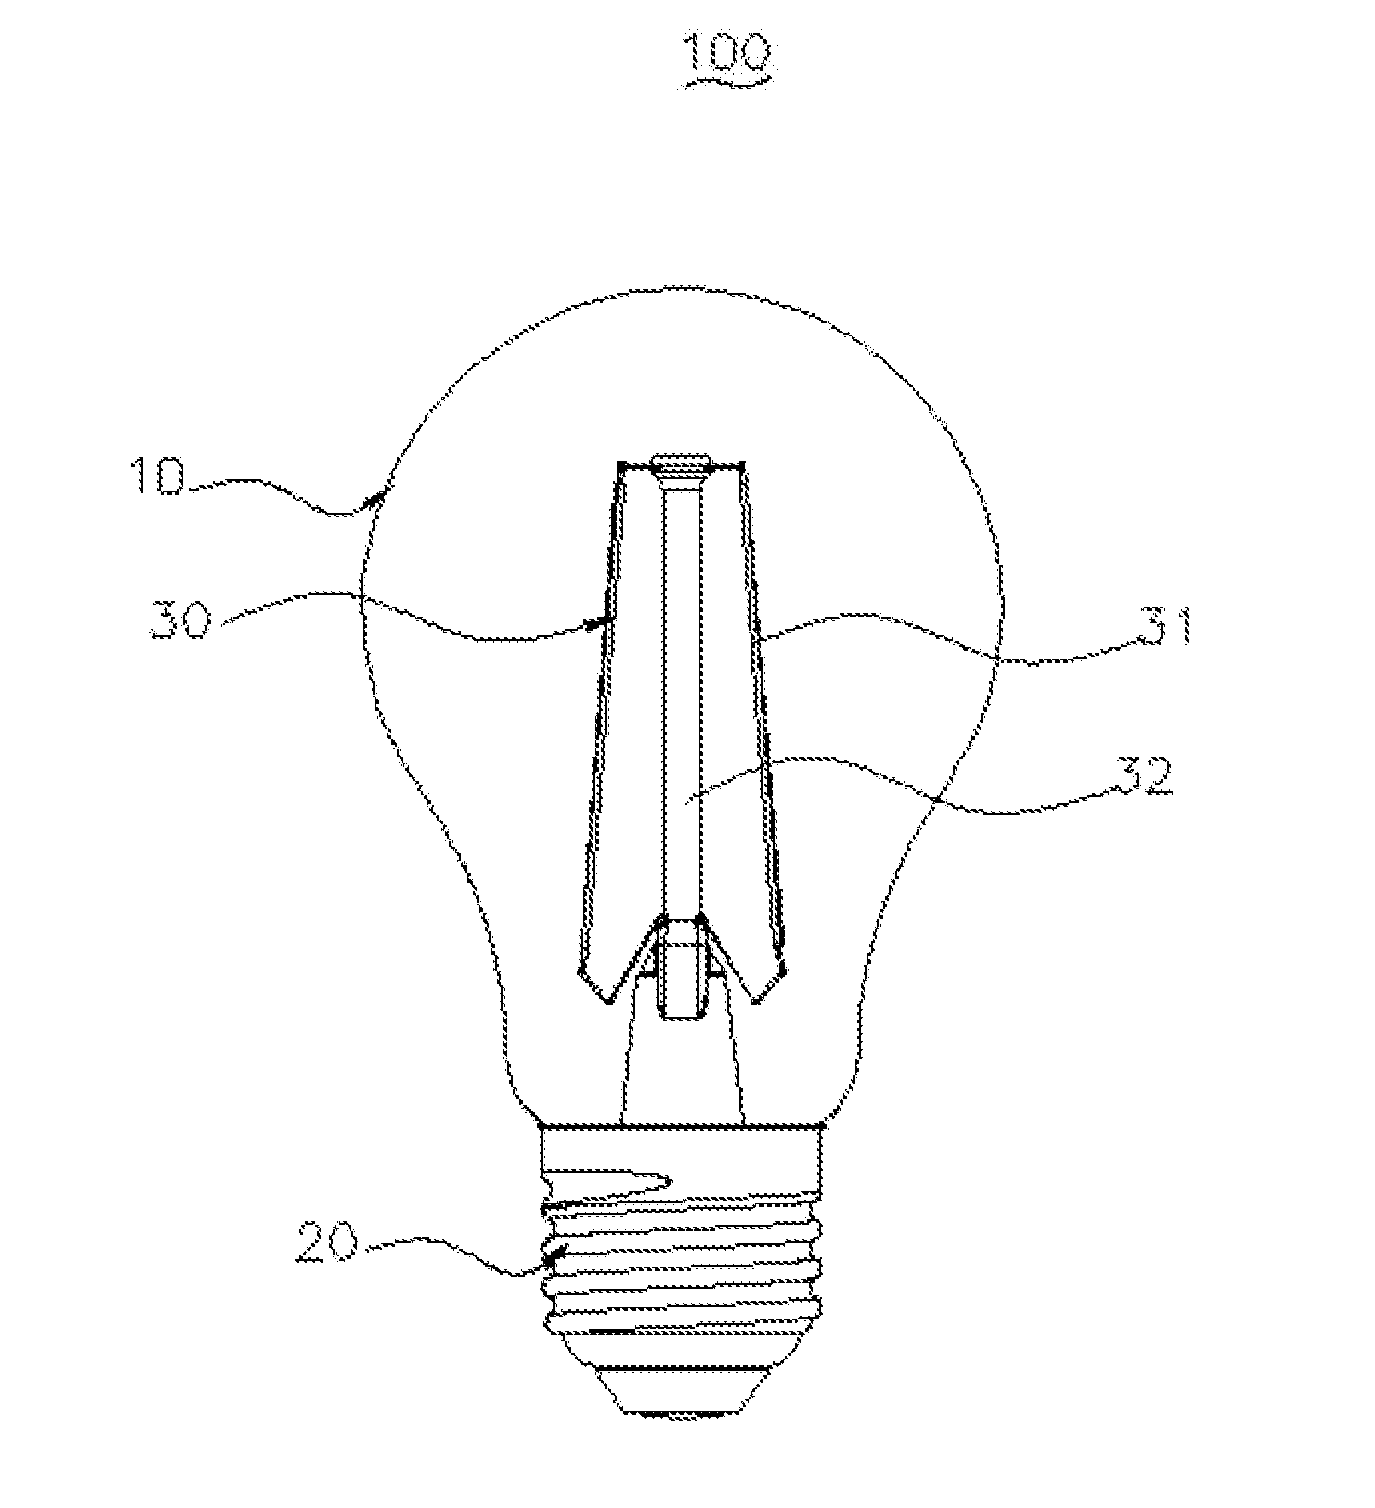 LED Filament Lamp